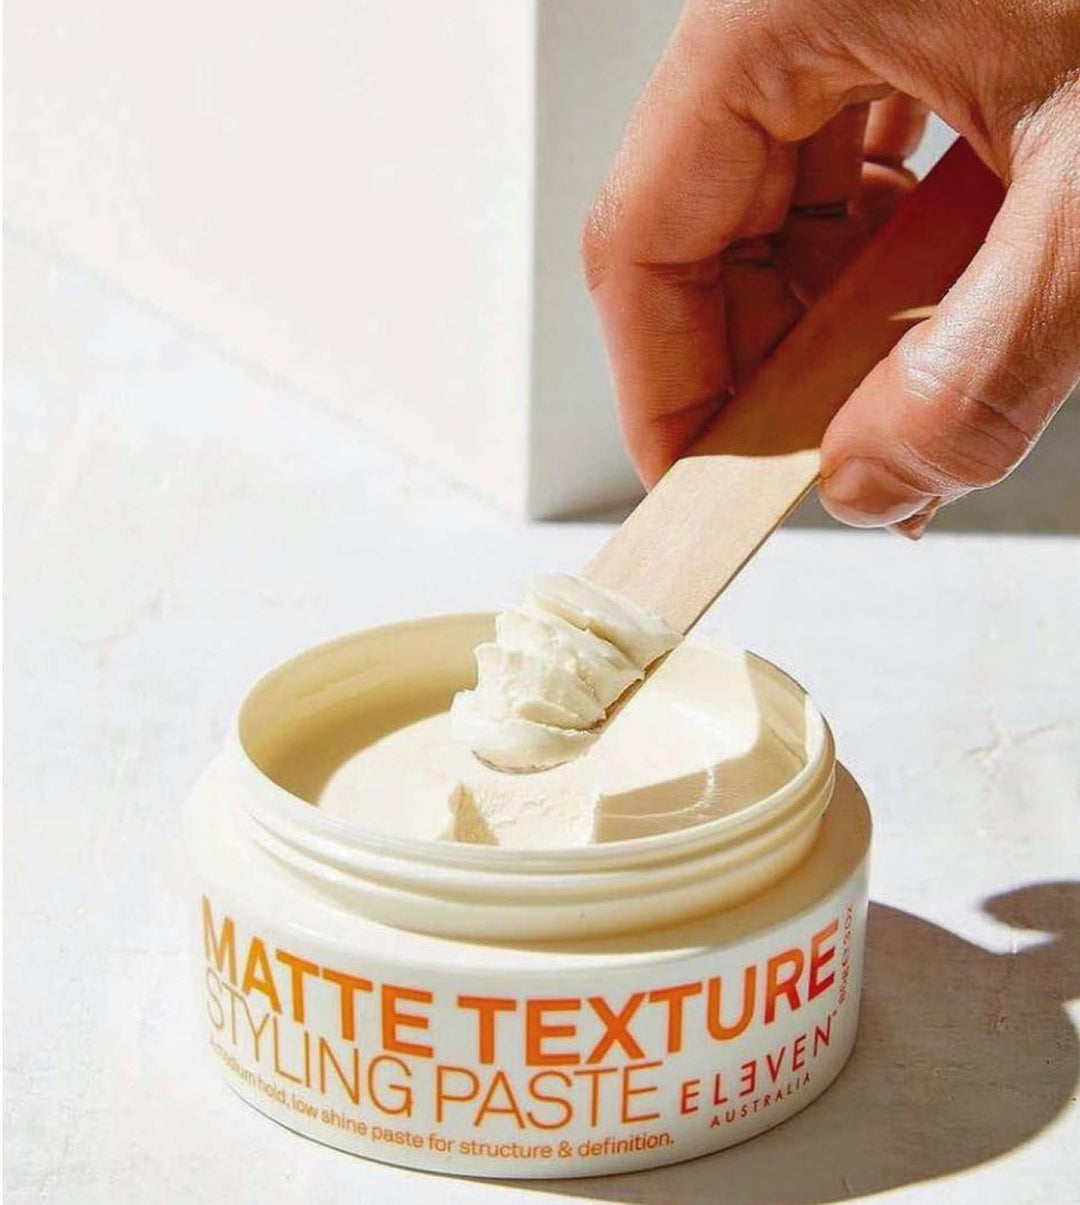 Eleven Australia Matte Texture Styling Paste